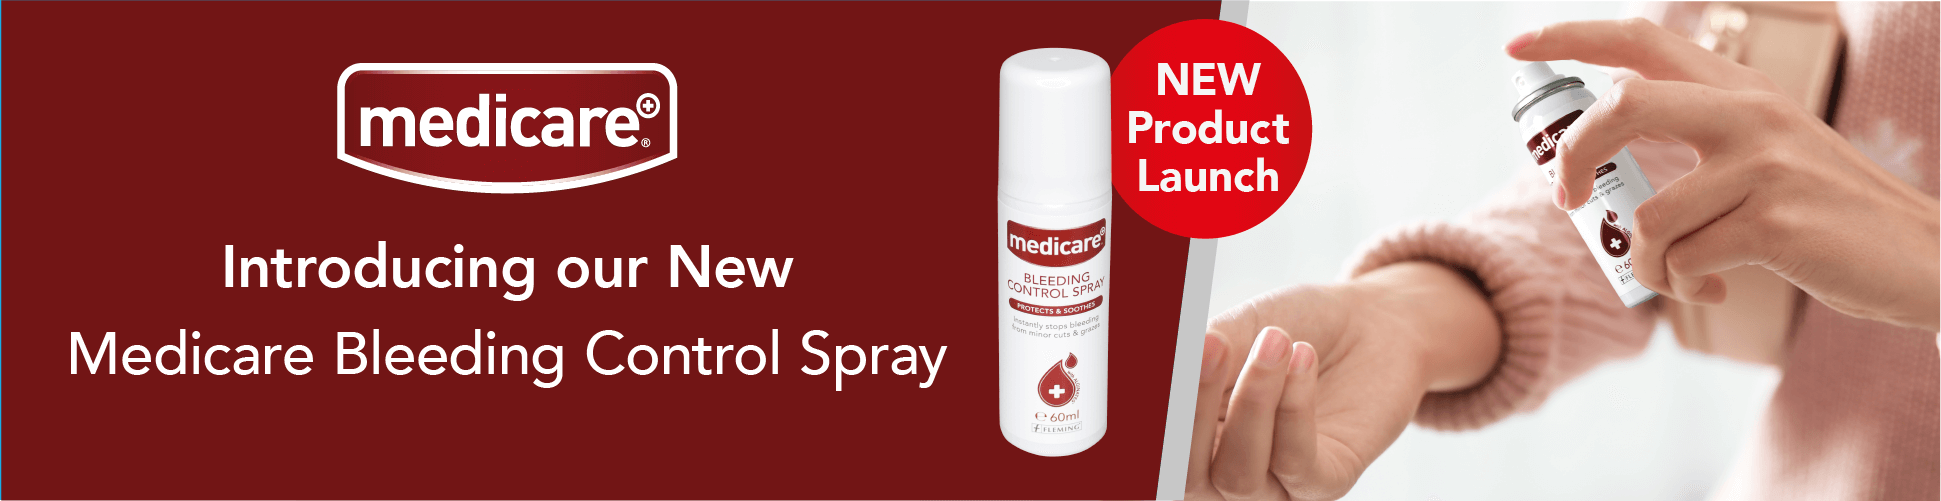 Product News | Medicare Bleeding Control Spray